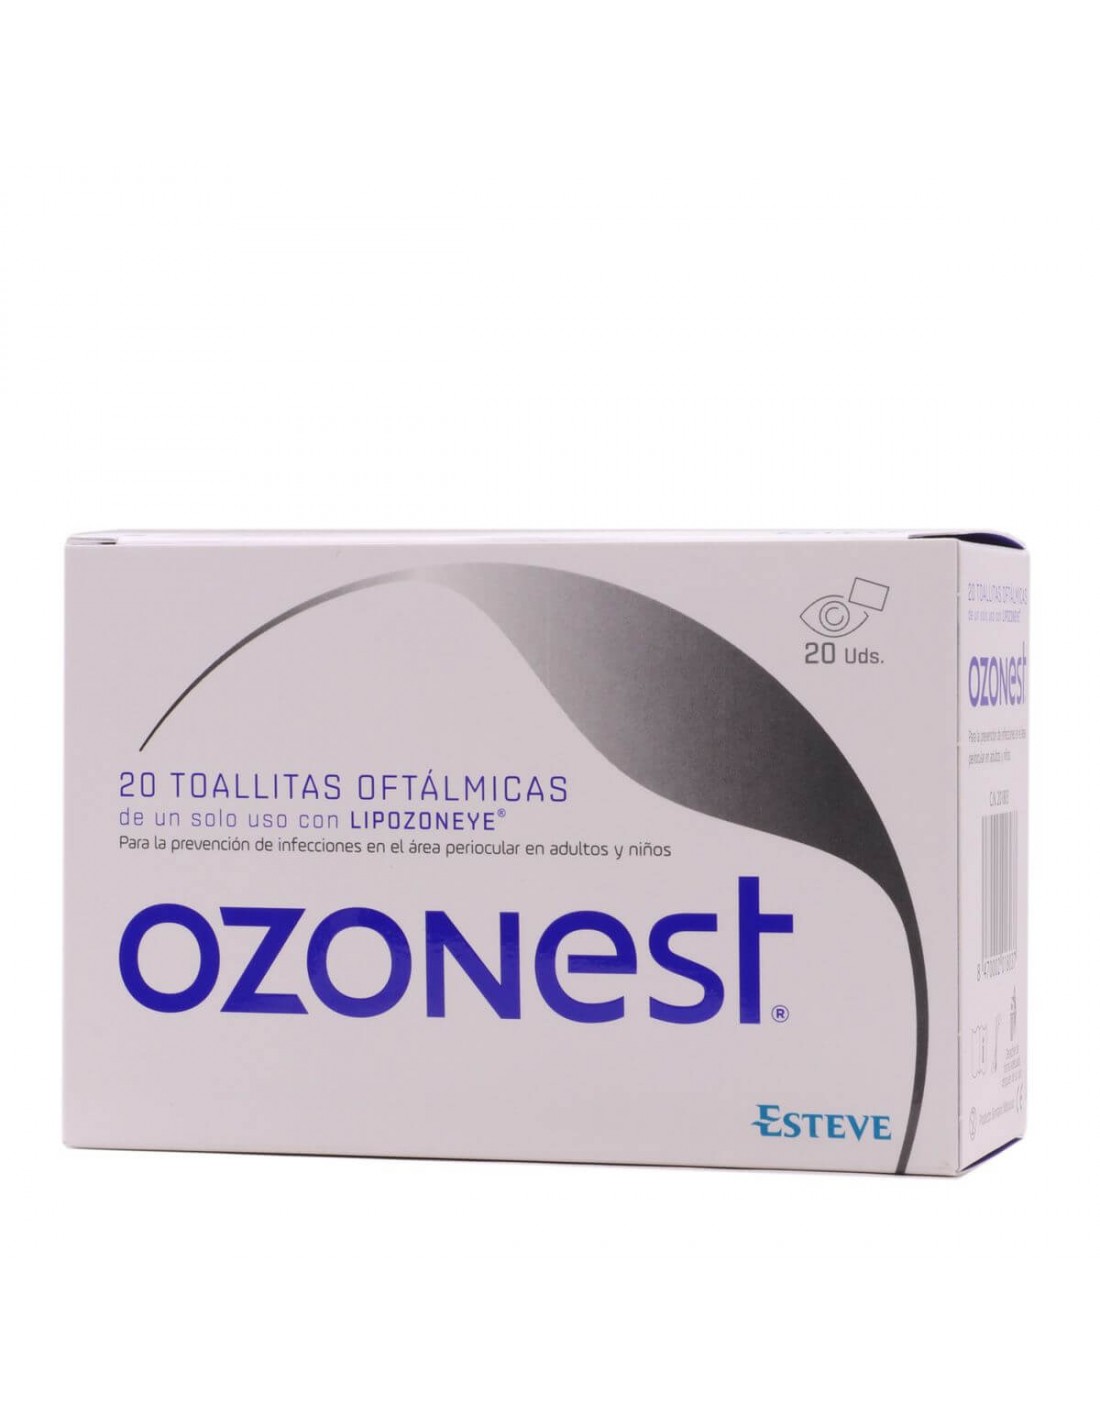 OZONEST 20 TOALLITAS OFTALMICAS Online